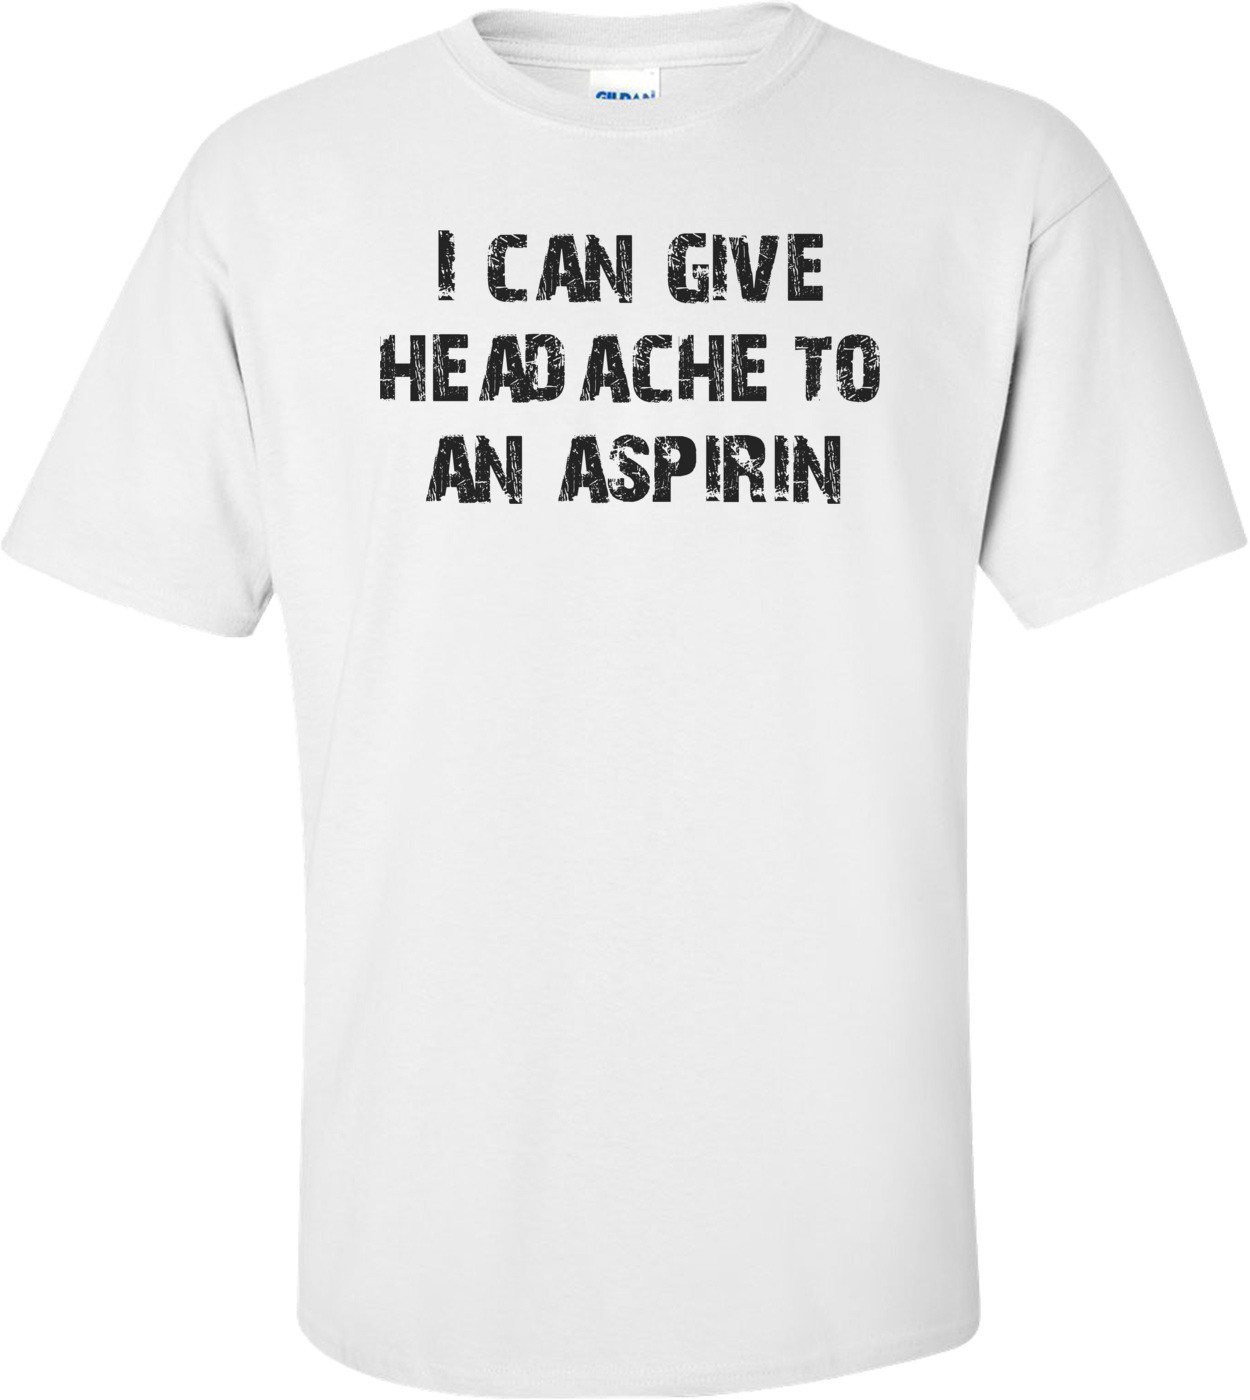 I can give headache to an aspirin Shirt